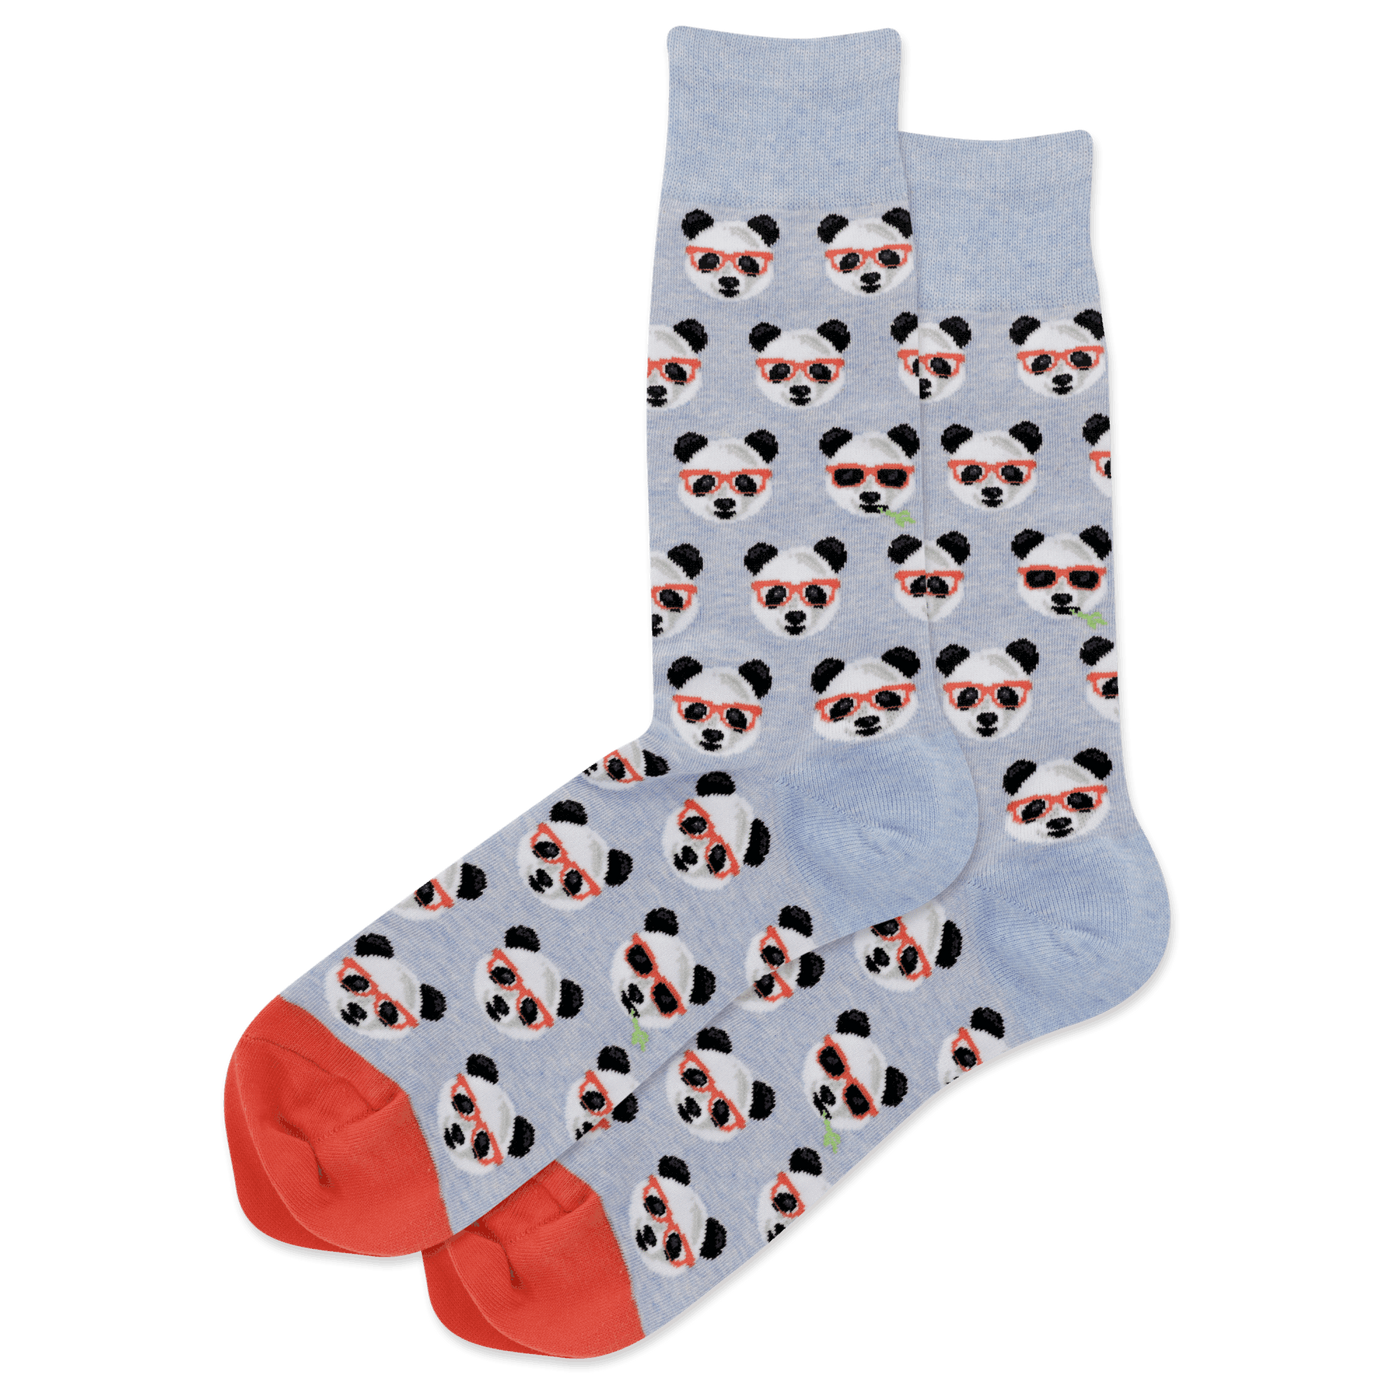 "Smart Panda" Cotton Crew Socks by Hot Sox - Large